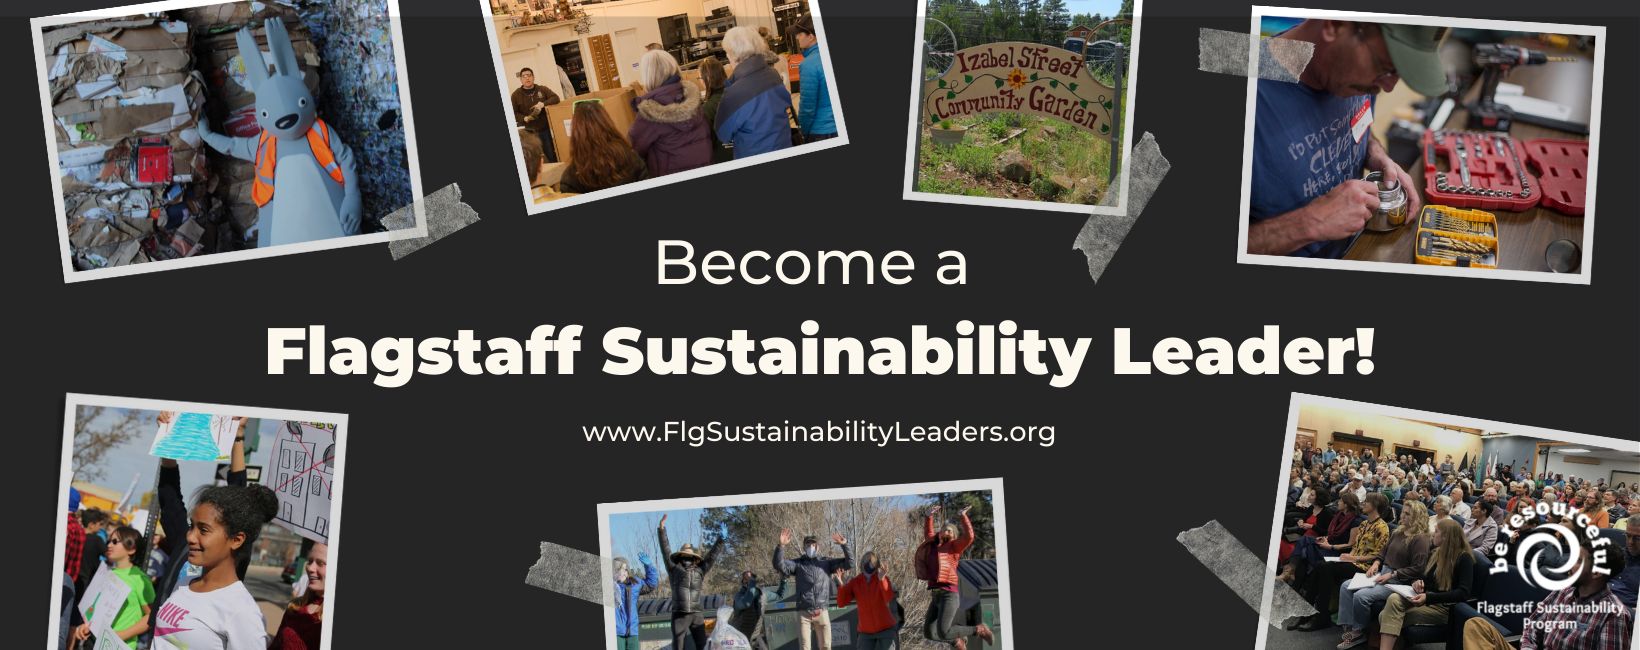 Flagstaff Sustainability Leaders Course, Flagstaff, Arizona, United States